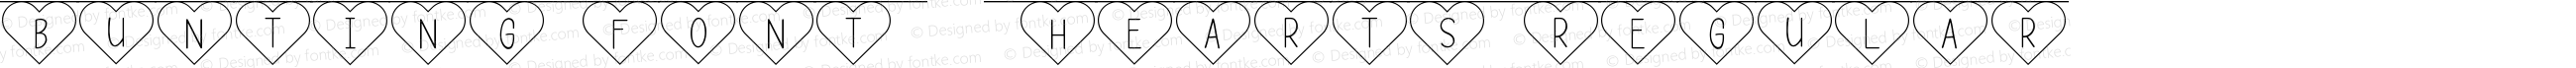 Bunting Font - Hearts Regular